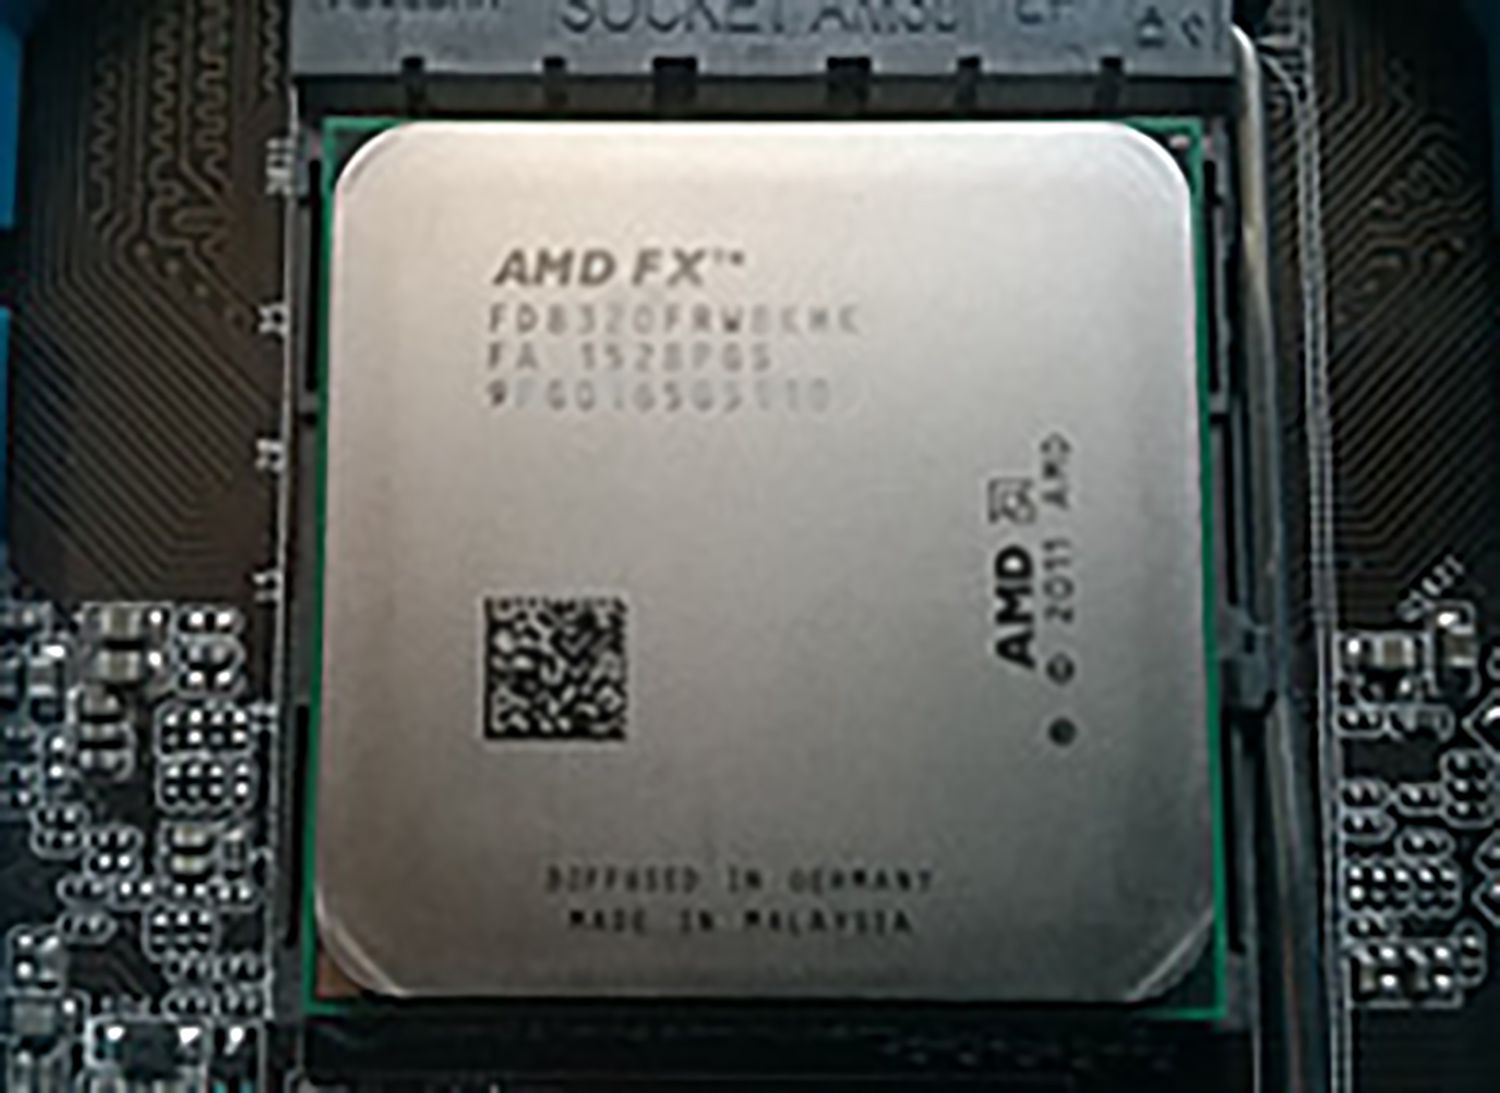 Amd fx память. АМД 8320. Процессор AMD 8320e. Процессор FX-8320. АМД ФХ 8320.